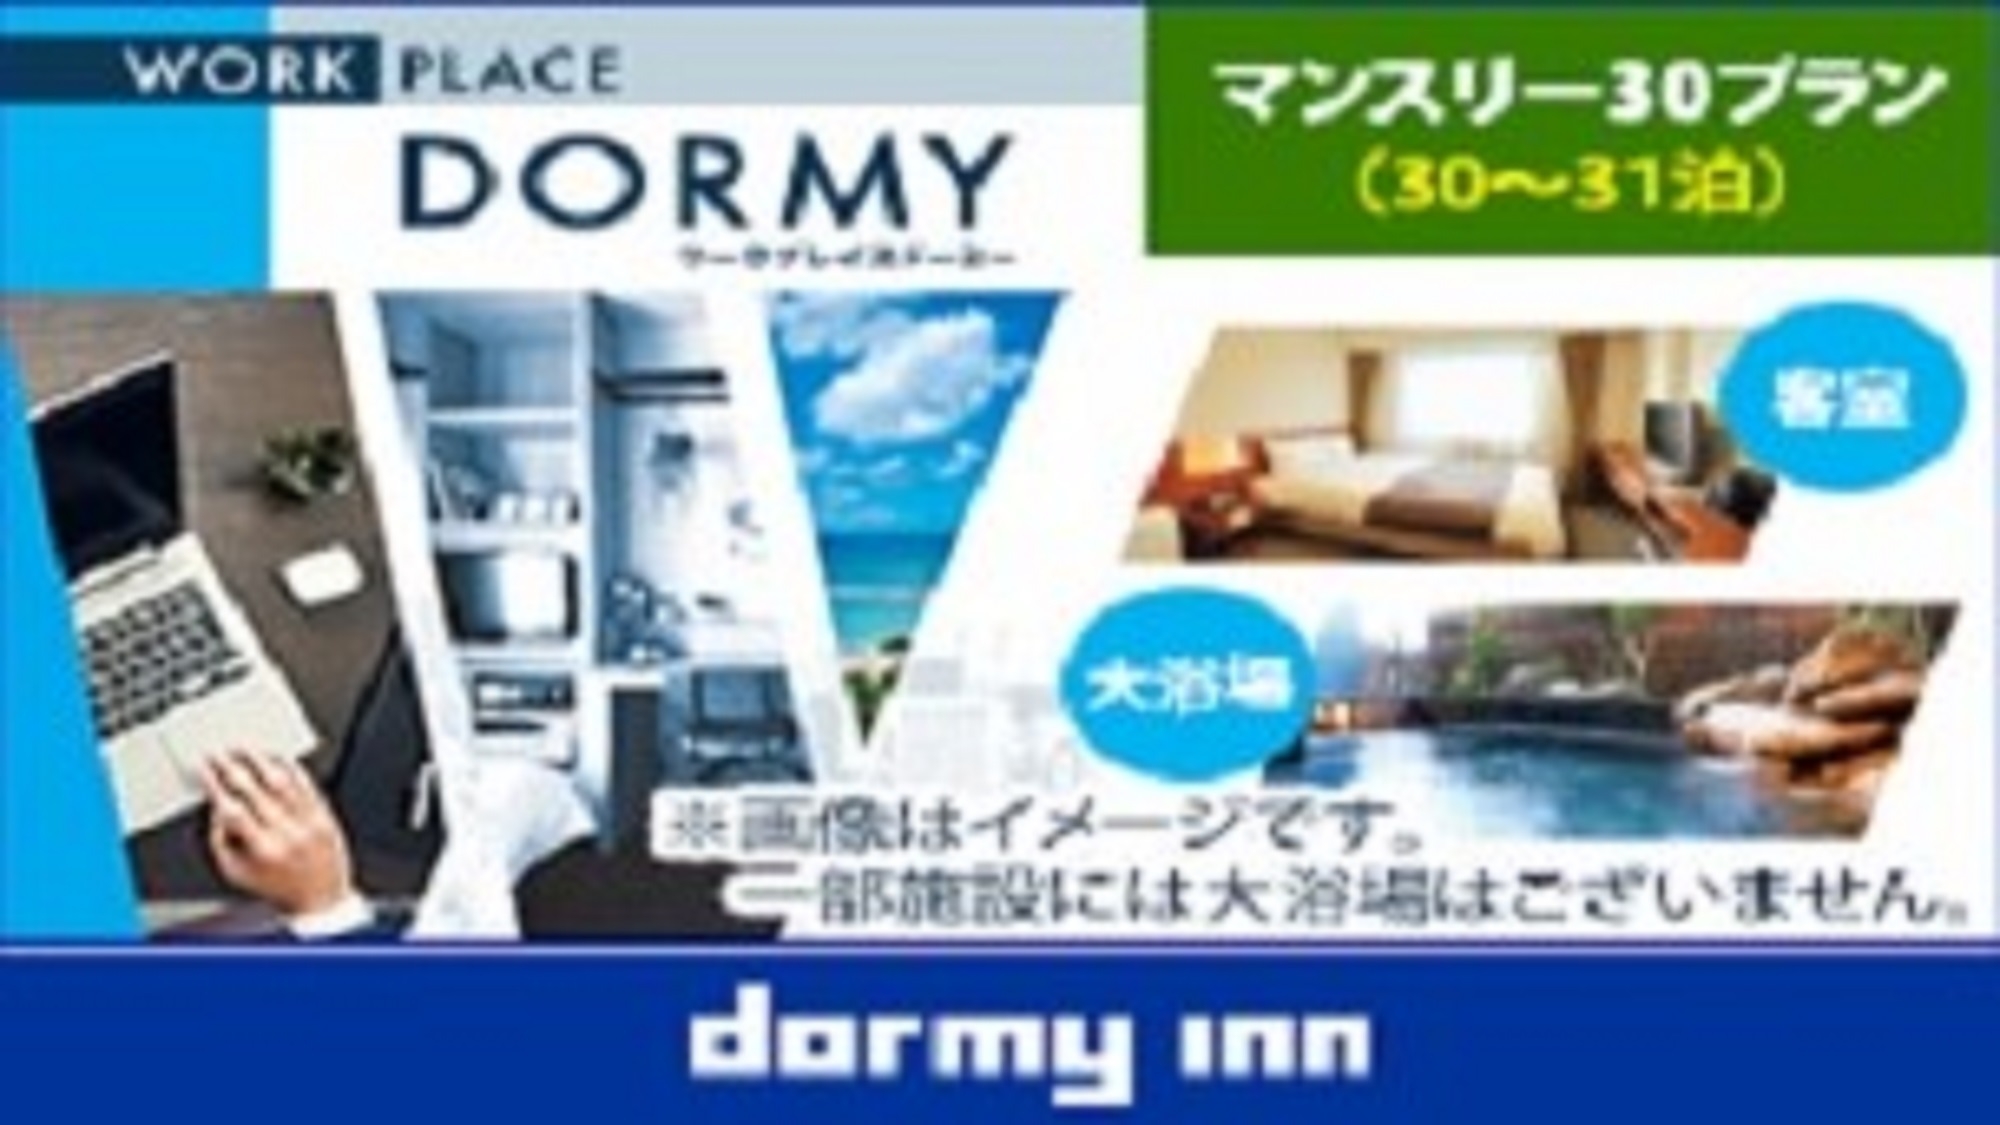 【WORK PLACE DORMY】マンスリープラン（ 30〜31泊）≪朝食付き・清掃なし≫